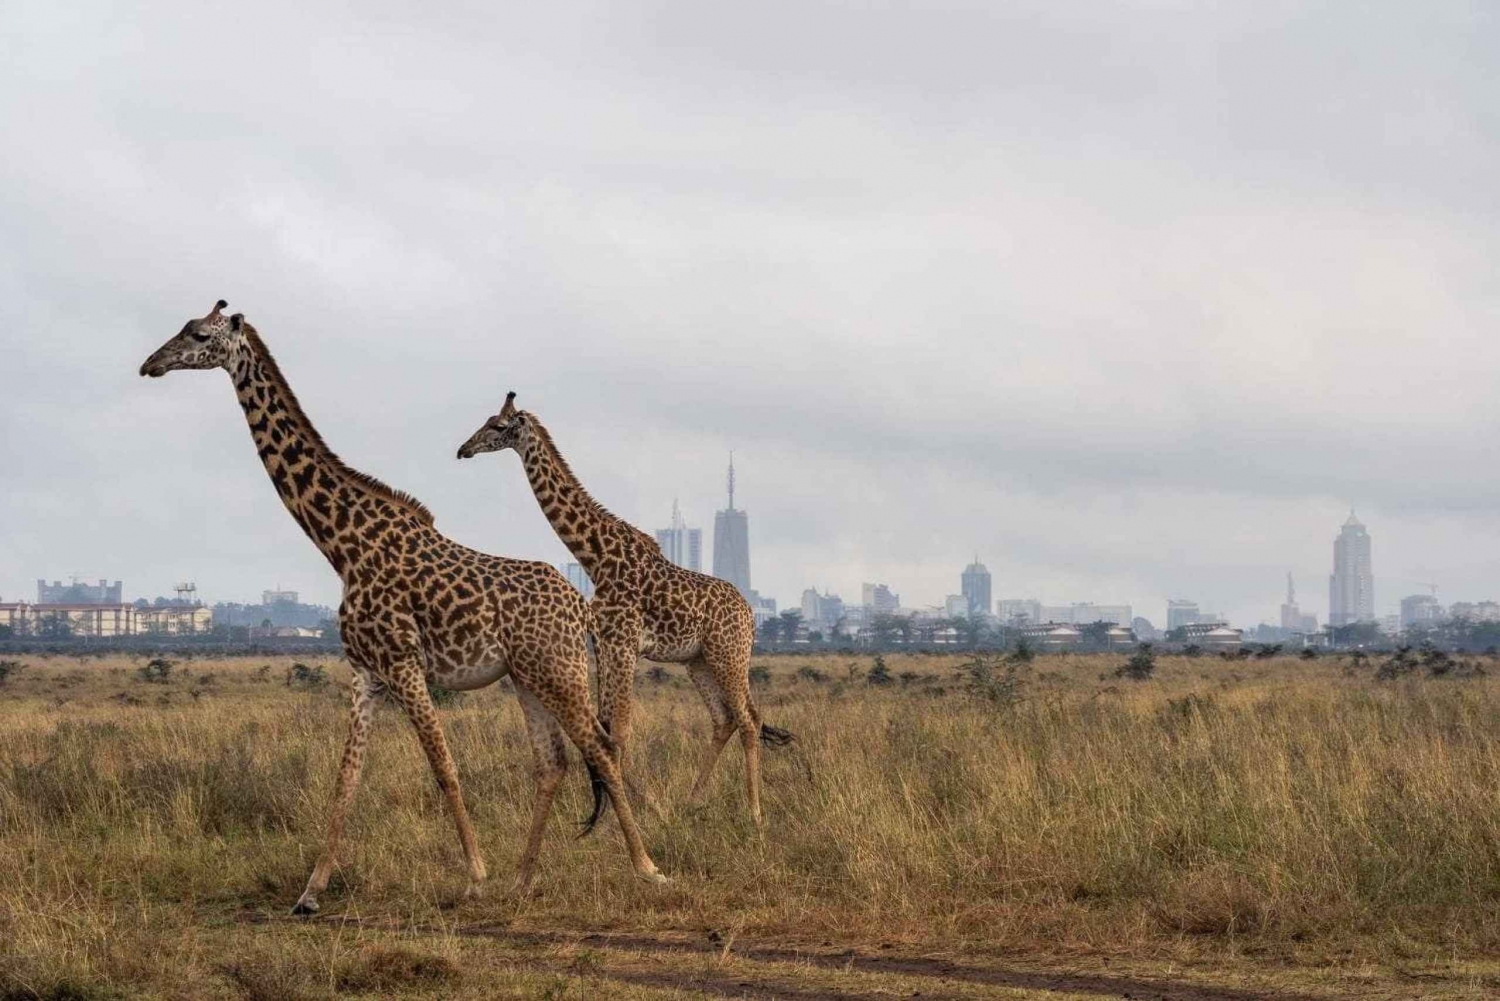 Nairobi;Nairobin kansallispuisto, Baby Elephant& Giraffe Center (vauvanorsu& kirahvi keskus)